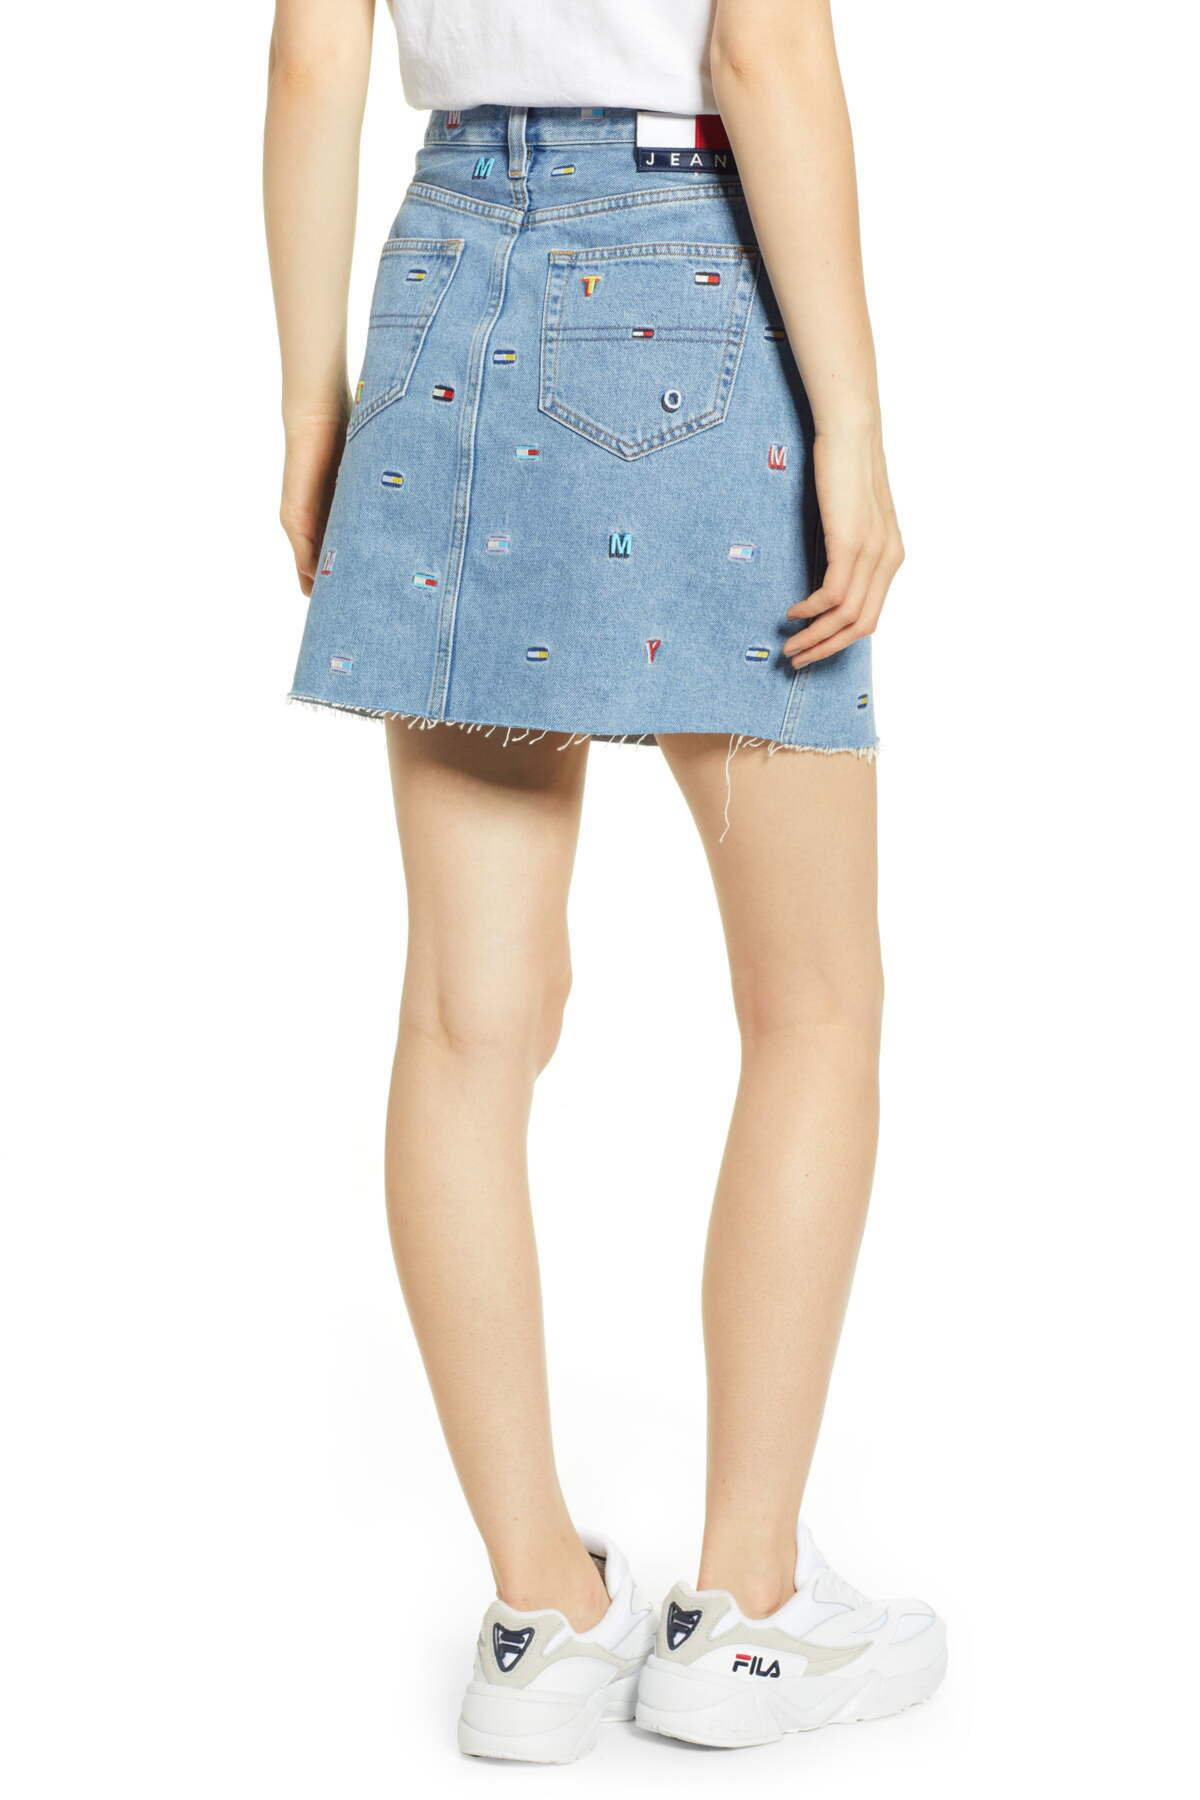 Tommy Hilfiger Embroidered Denim Mini Skirt in Blue - Lyst